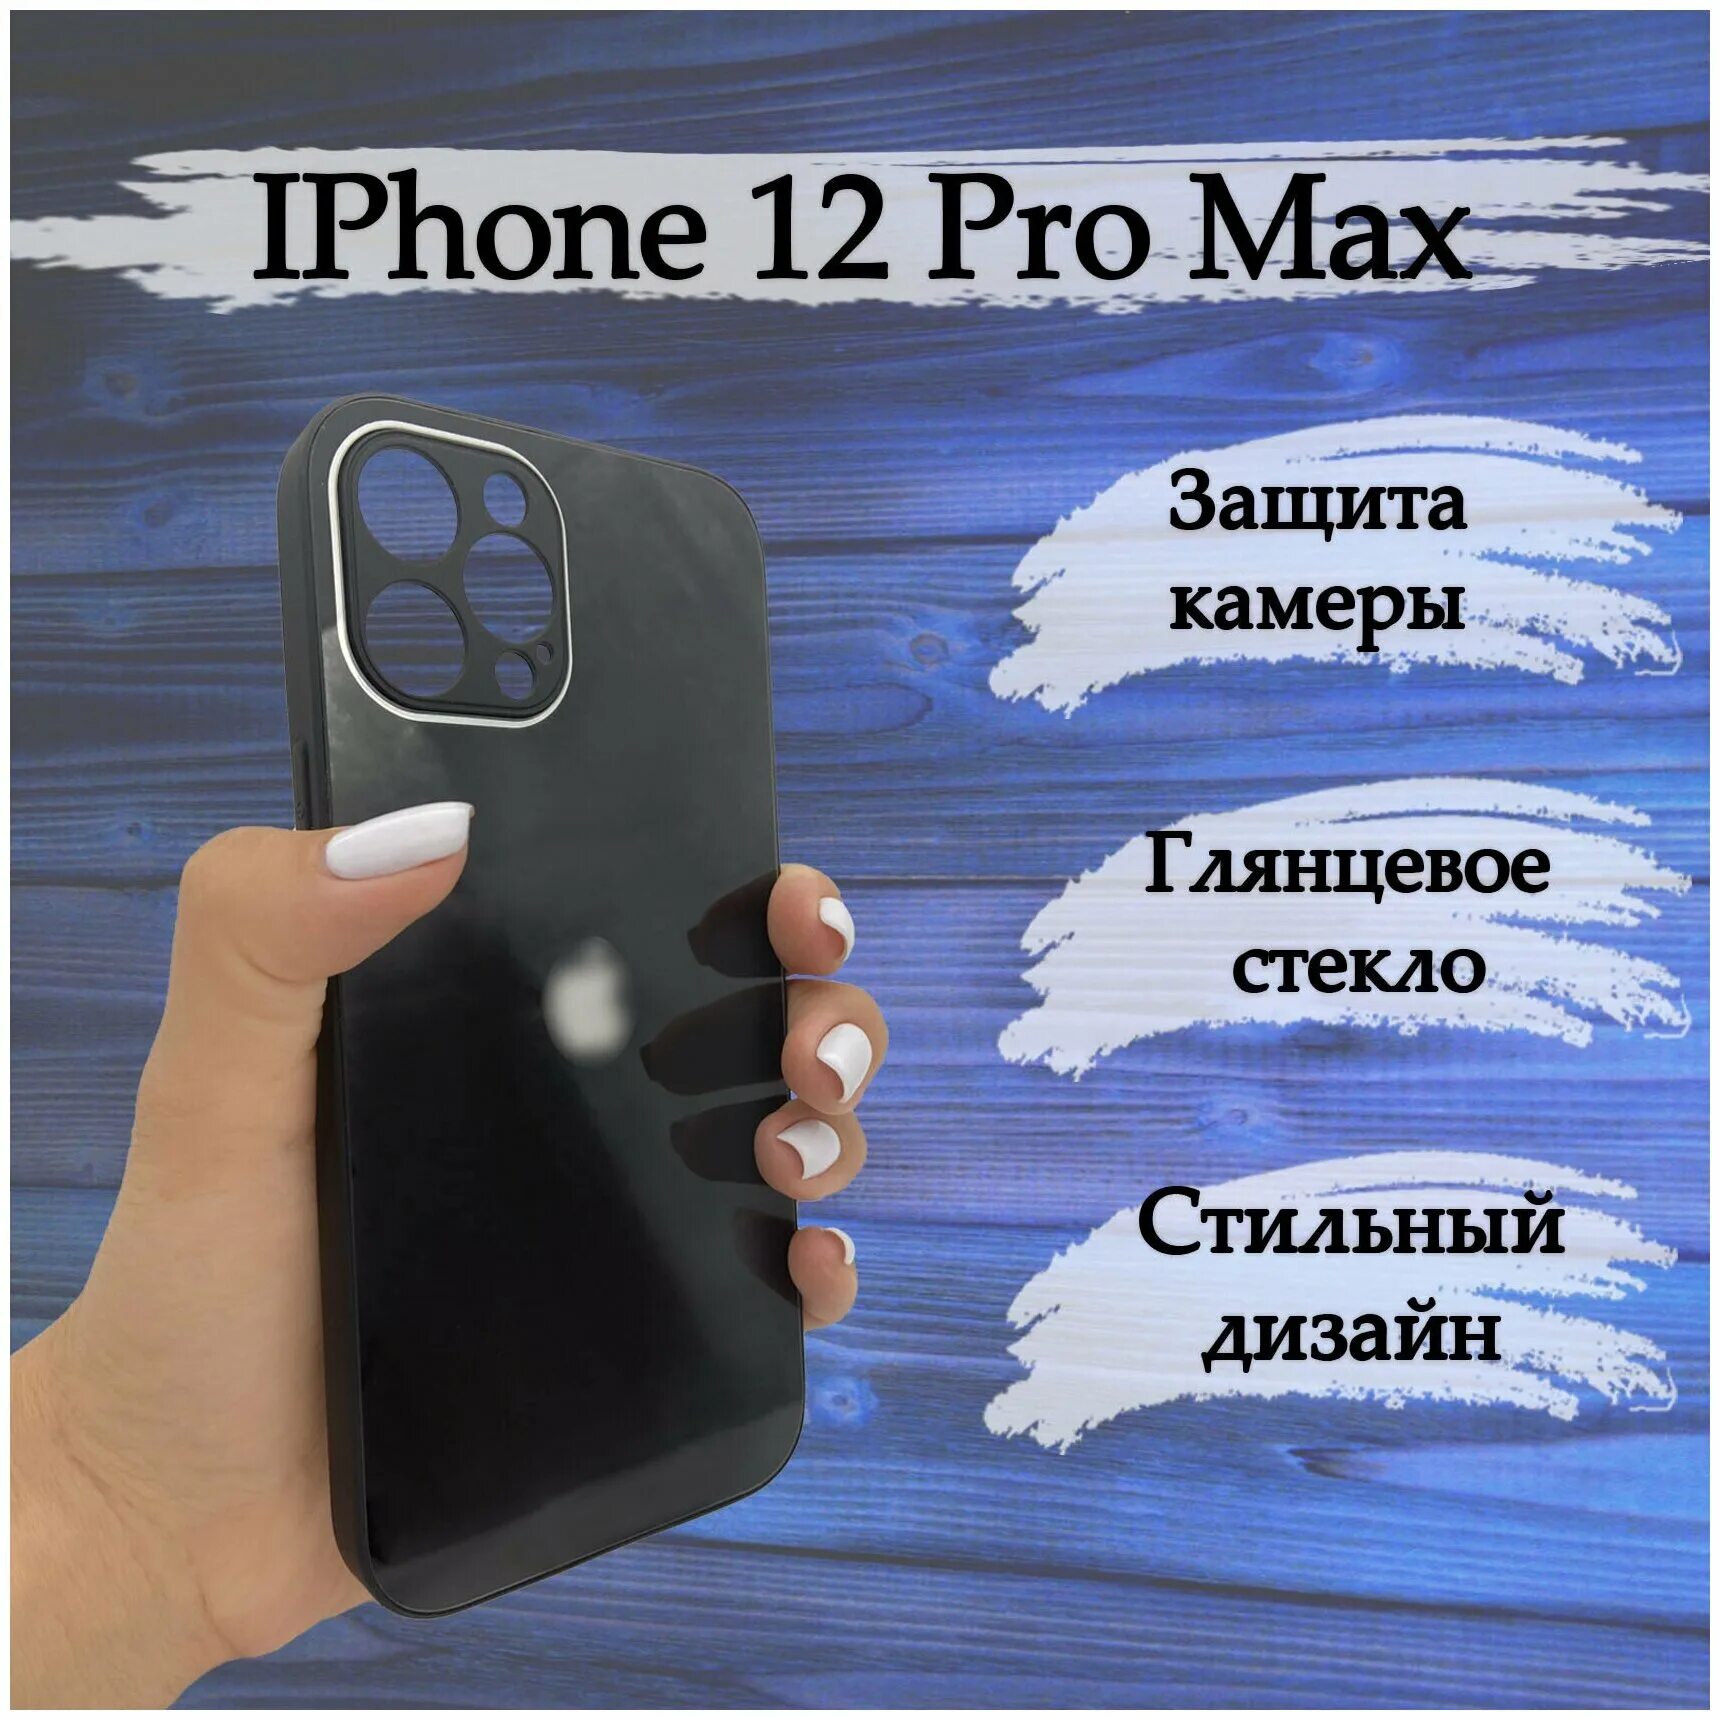 Сайт макс айфон. Айфон 12 про Макс. Стеклянный чехол на айфон 12 Pro Max. Чехол на айфон 12 про Макс. Iphone 12 Pro Max характеристики.